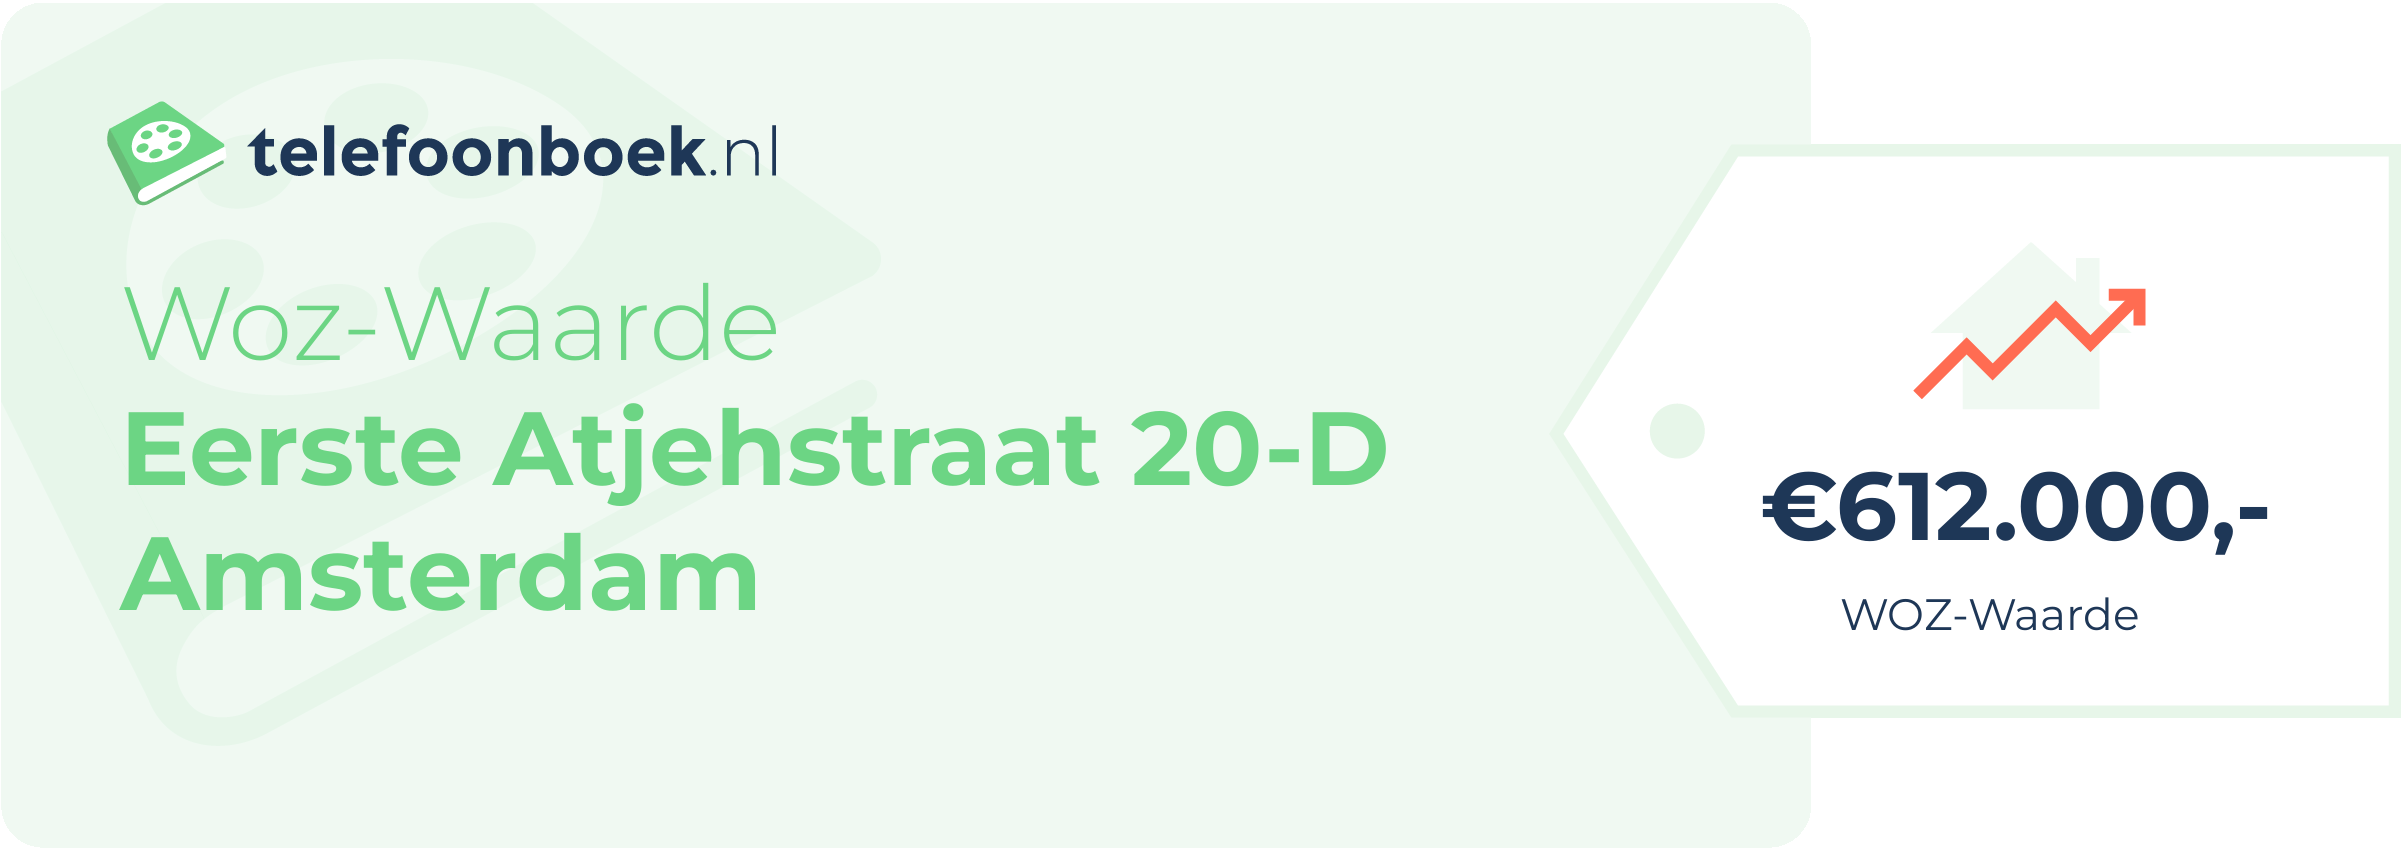 WOZ-waarde Eerste Atjehstraat 20-D Amsterdam